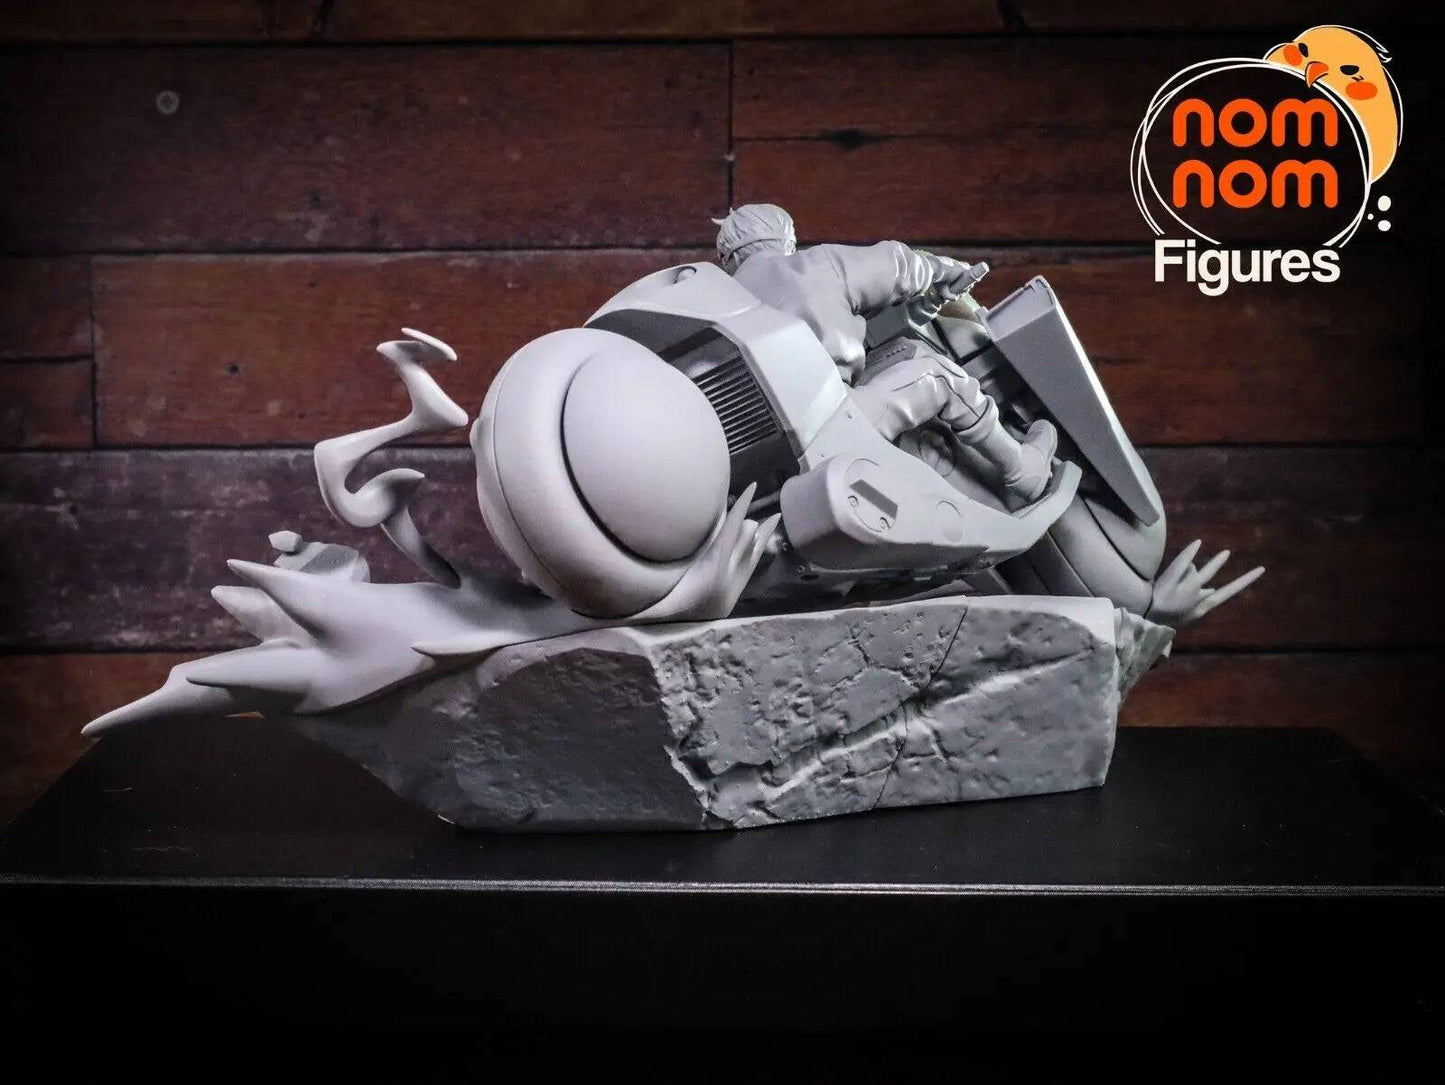 Care-Free Gang Leader | Resin Garage Kit Sculpture Anime Video Game Fan Art Statue | Nomnom Figures - Tattles Told 3D